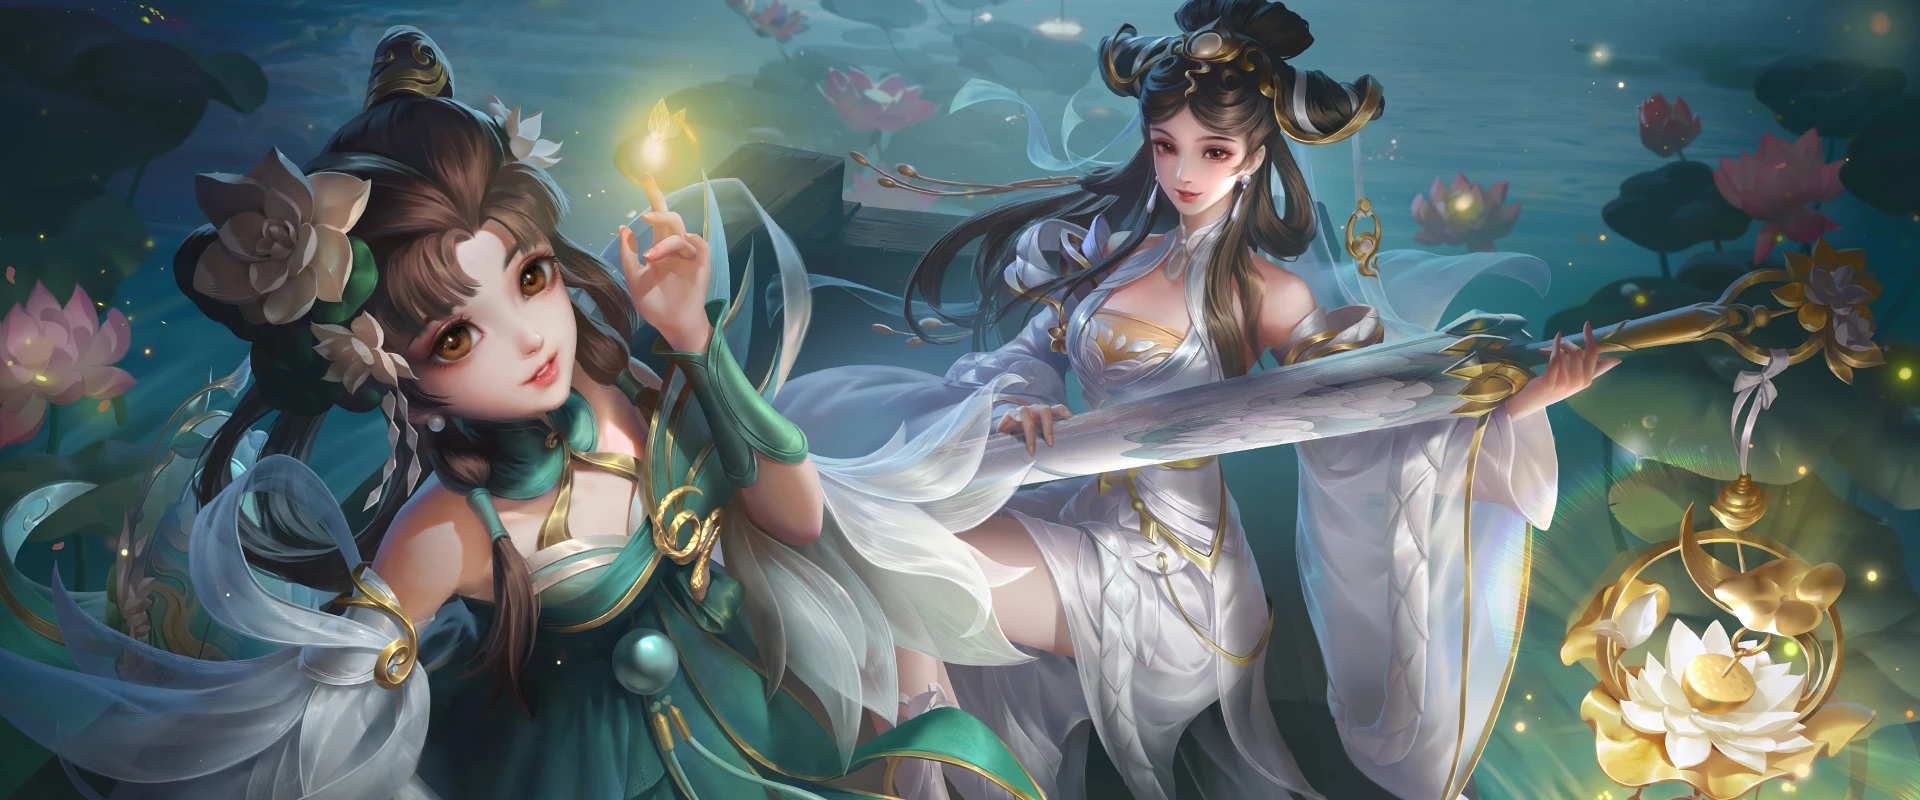 Honor of Kings: New Hero Fei (Assassin) Gameplay 